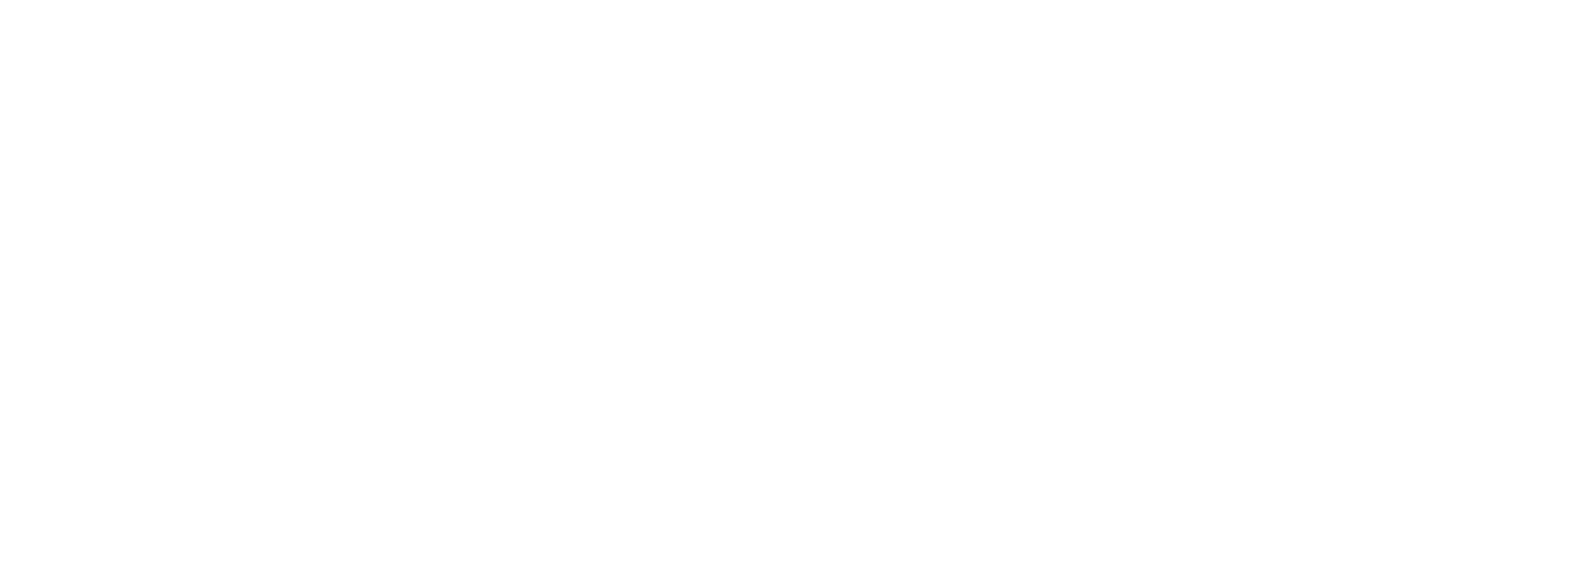 True Corporation logo for dark backgrounds (transparent PNG)